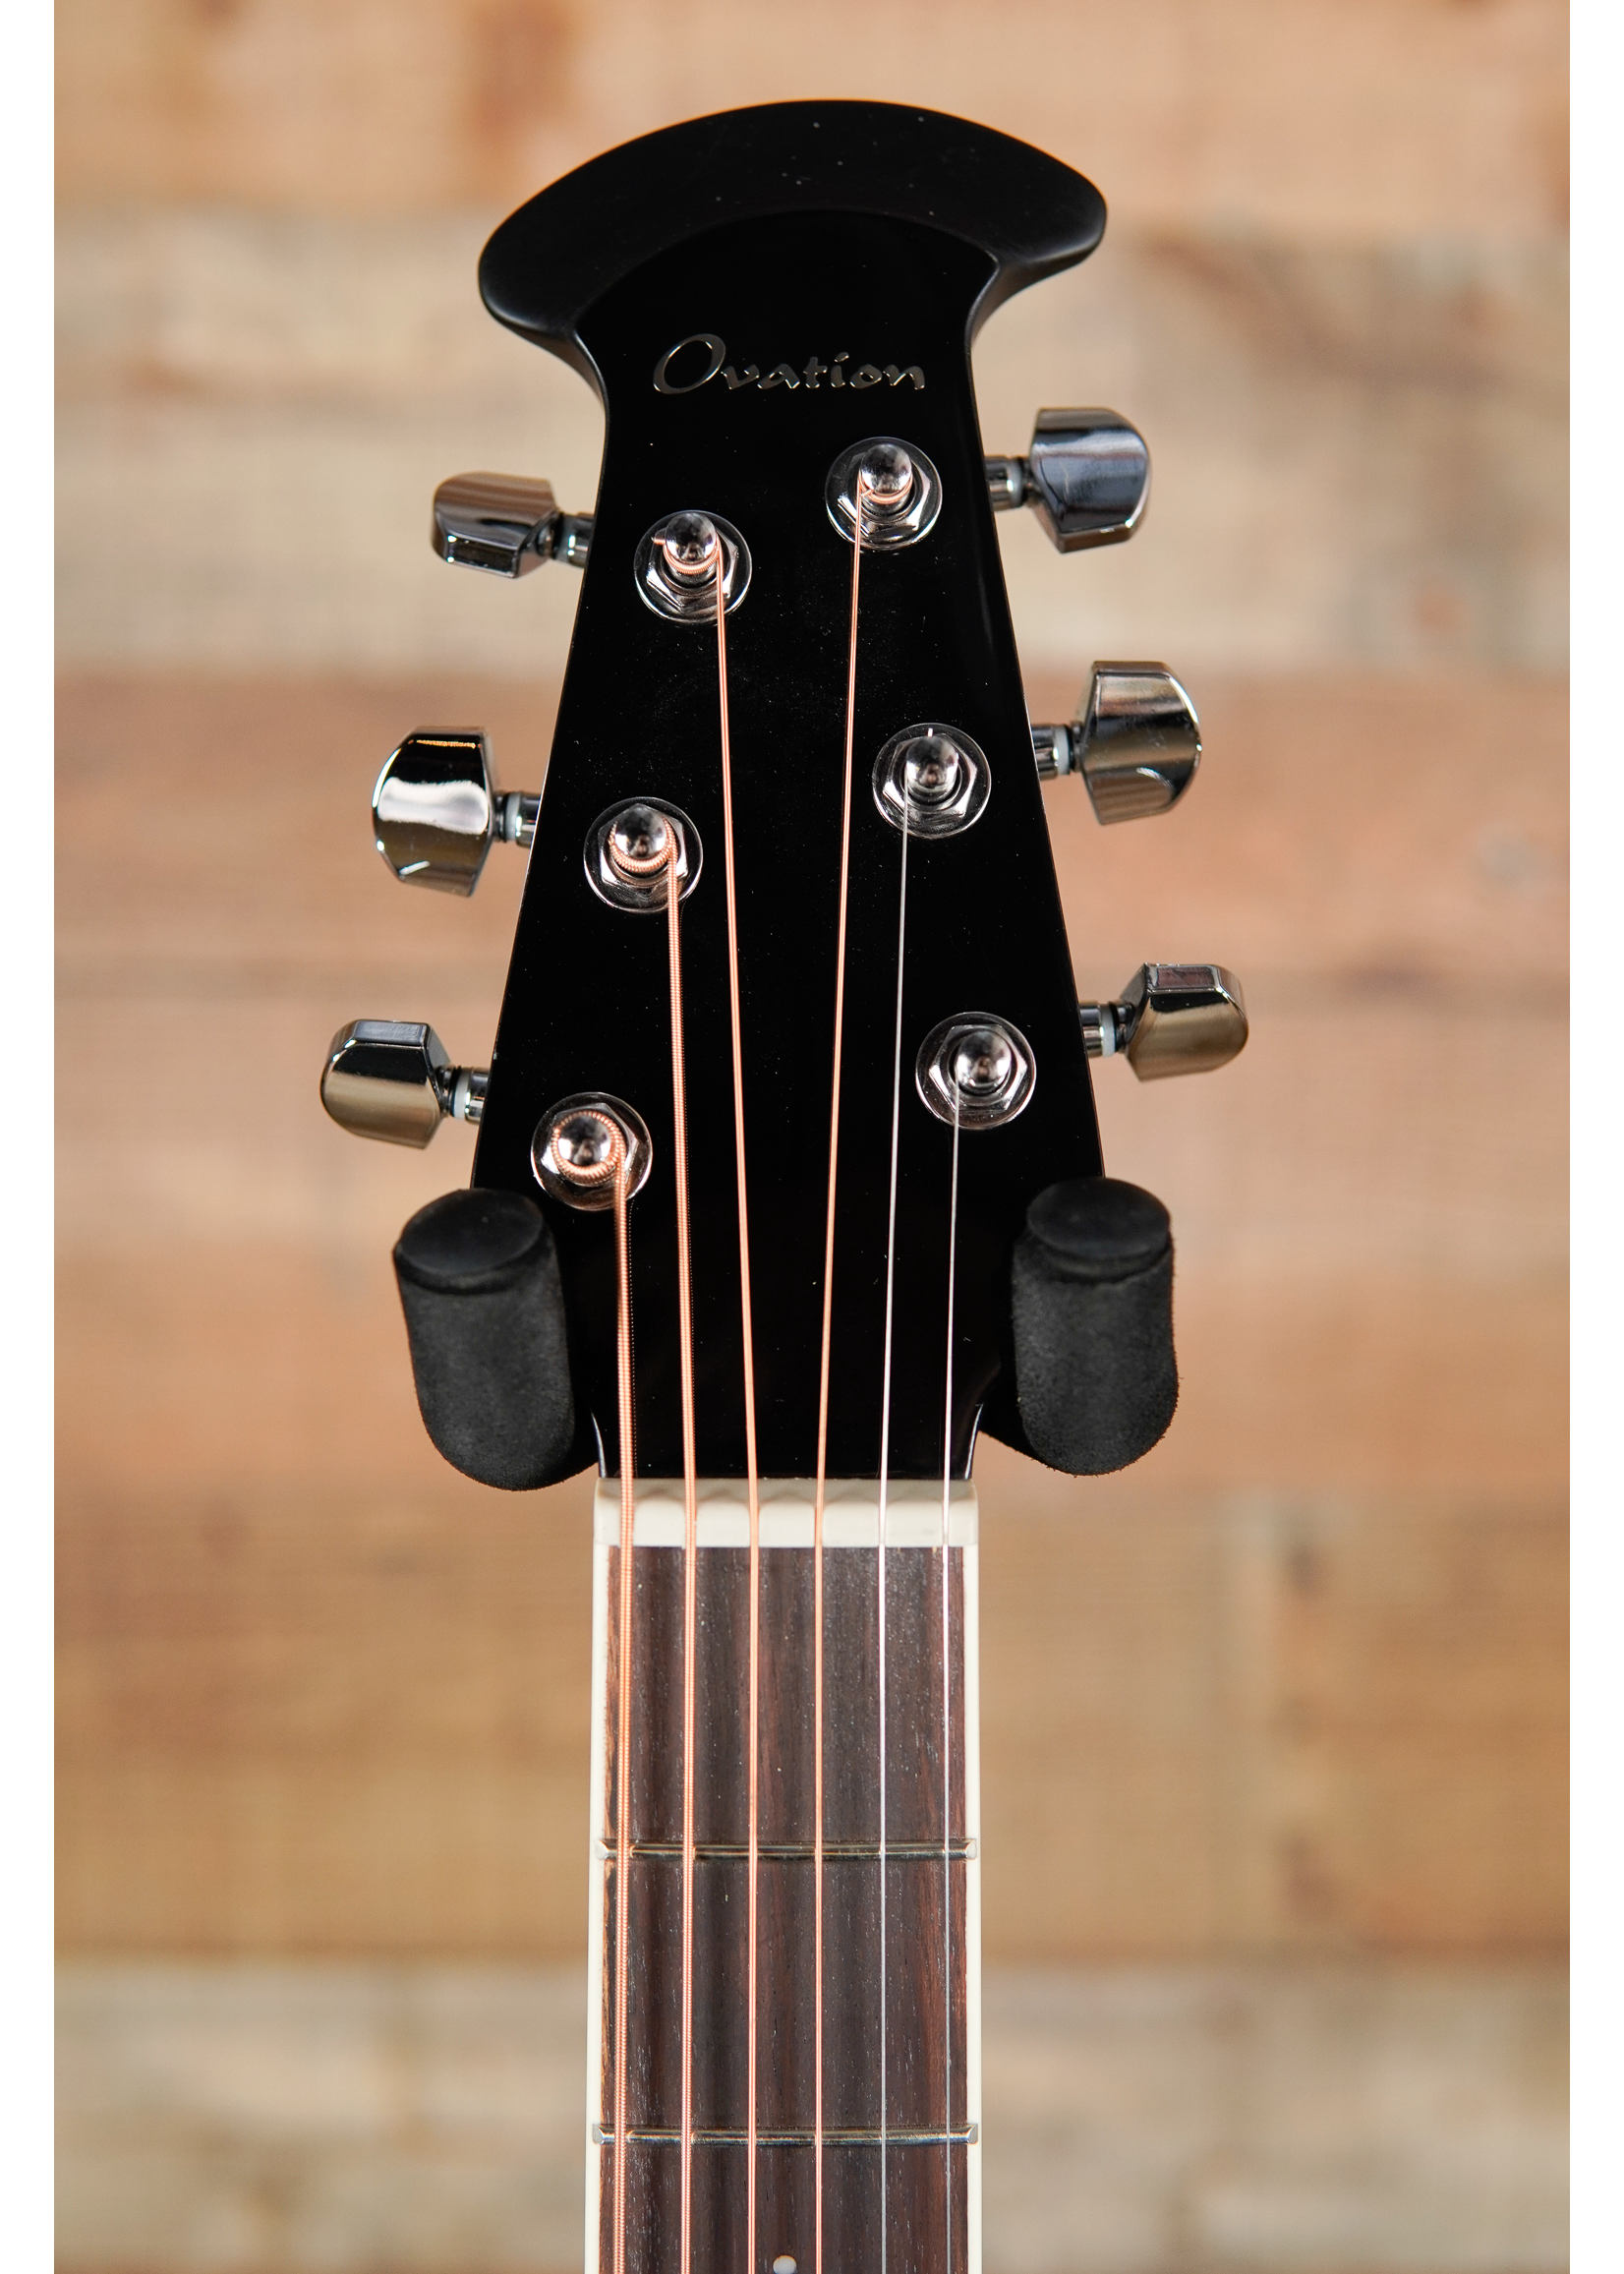 Ovation Ovation Celebrity Standard E-Acoustic Guitar CS24-5, CS/Cutaway, Black,Mid-Depth